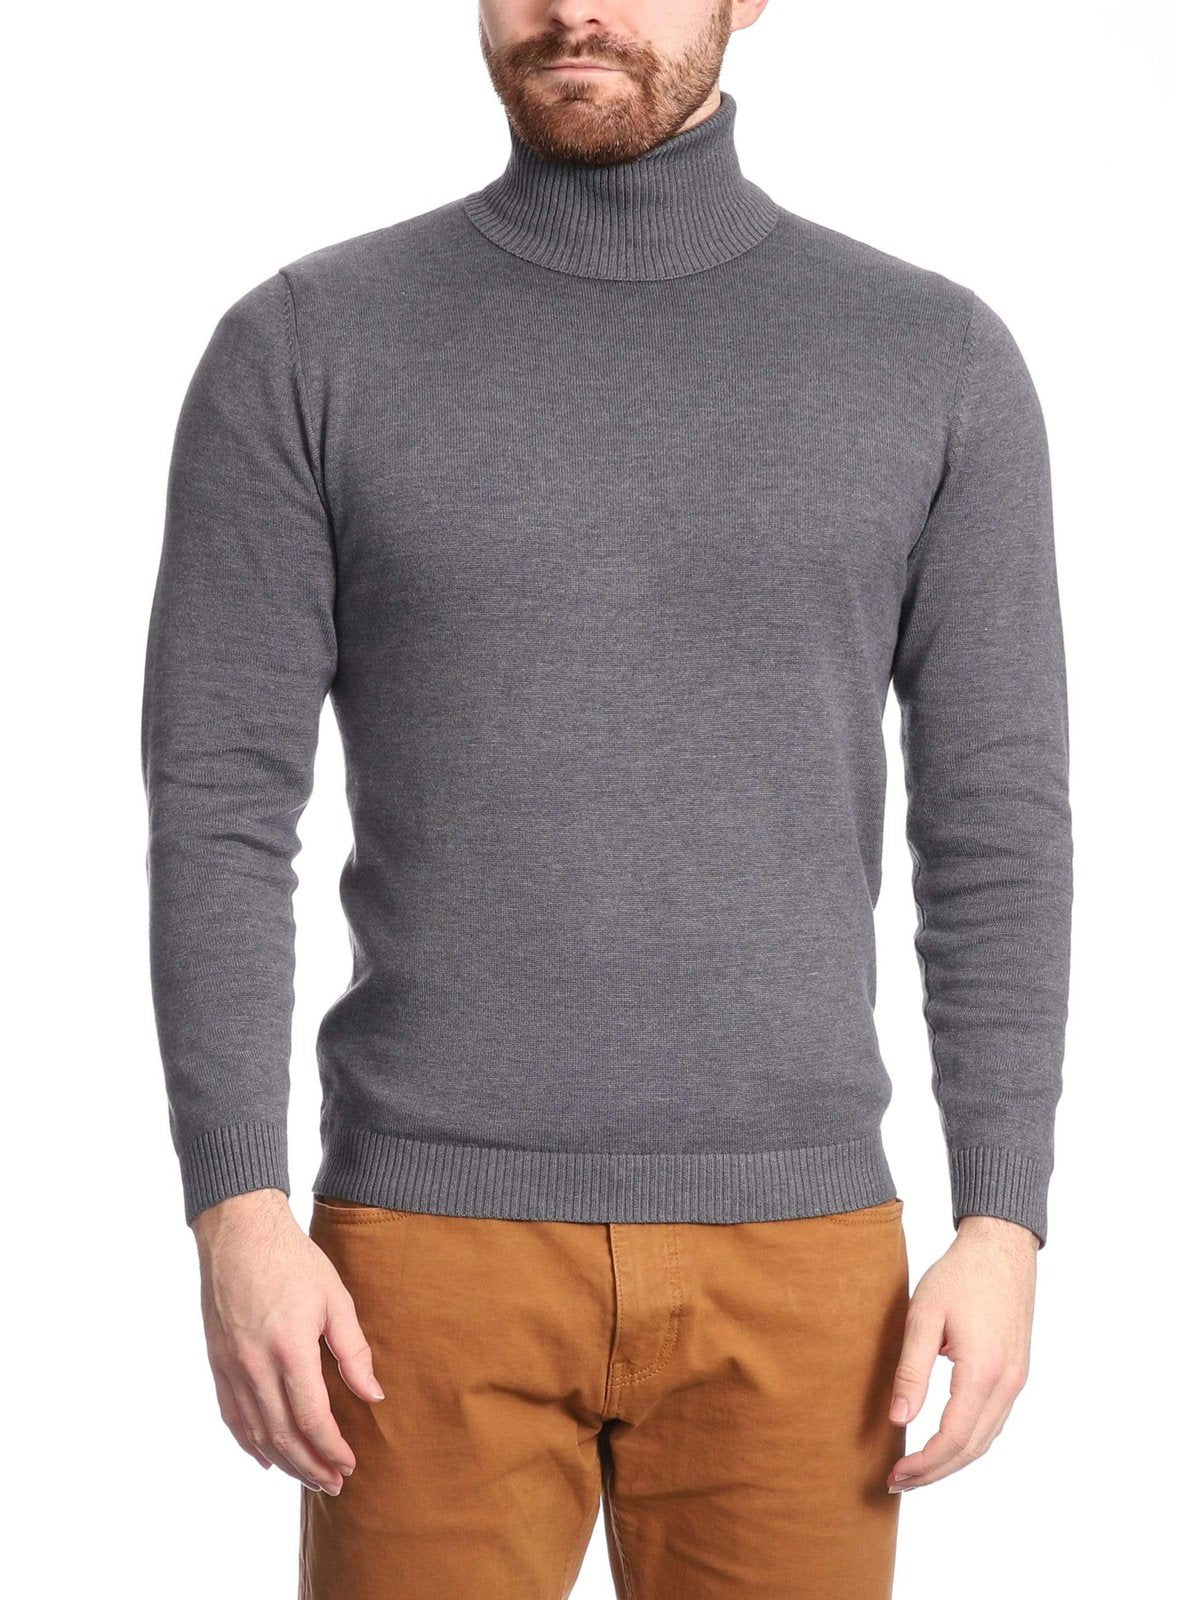 Arthur Black Default Category Migrated Gray / 2XL Arthur Black Men's Solid Gray Pullover Cotton Blend Turtleneck Sweater Shirt